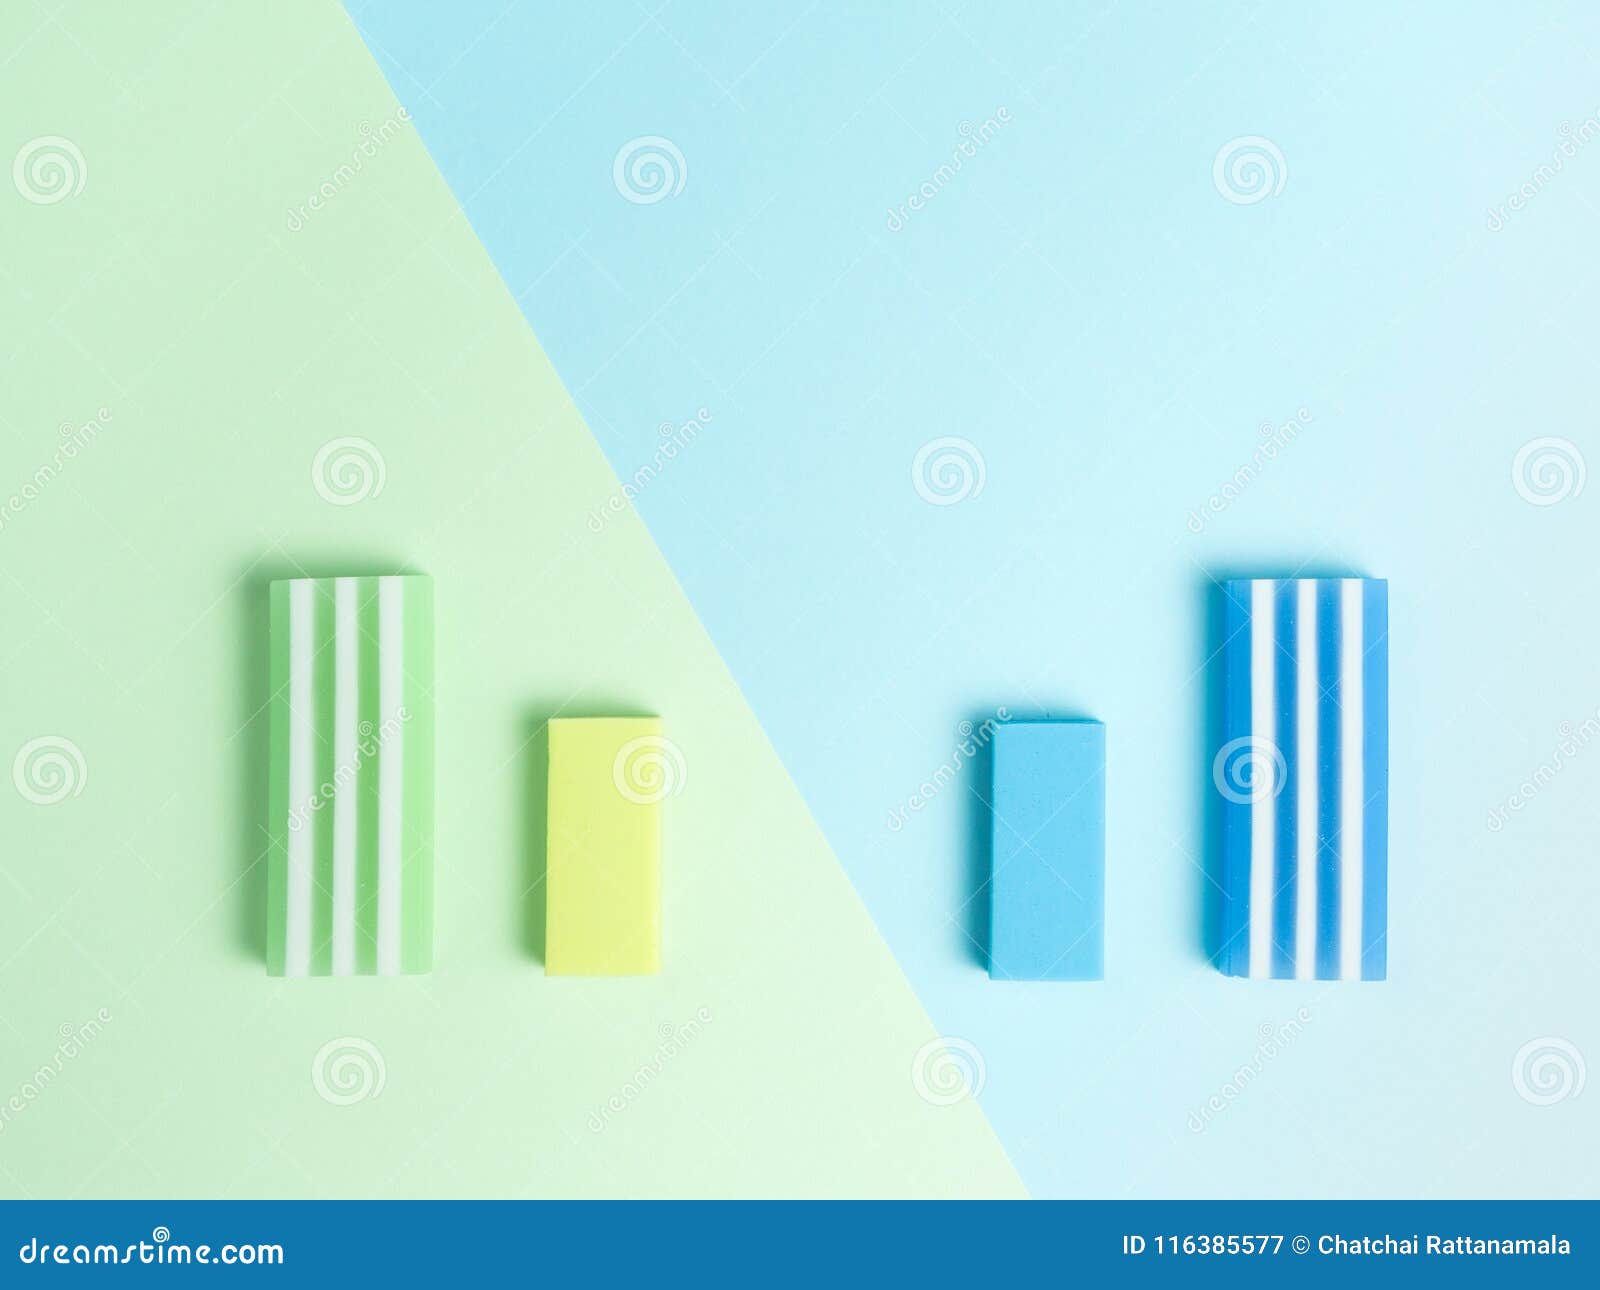 big and little green eraser and blue eraser on green and light blue background